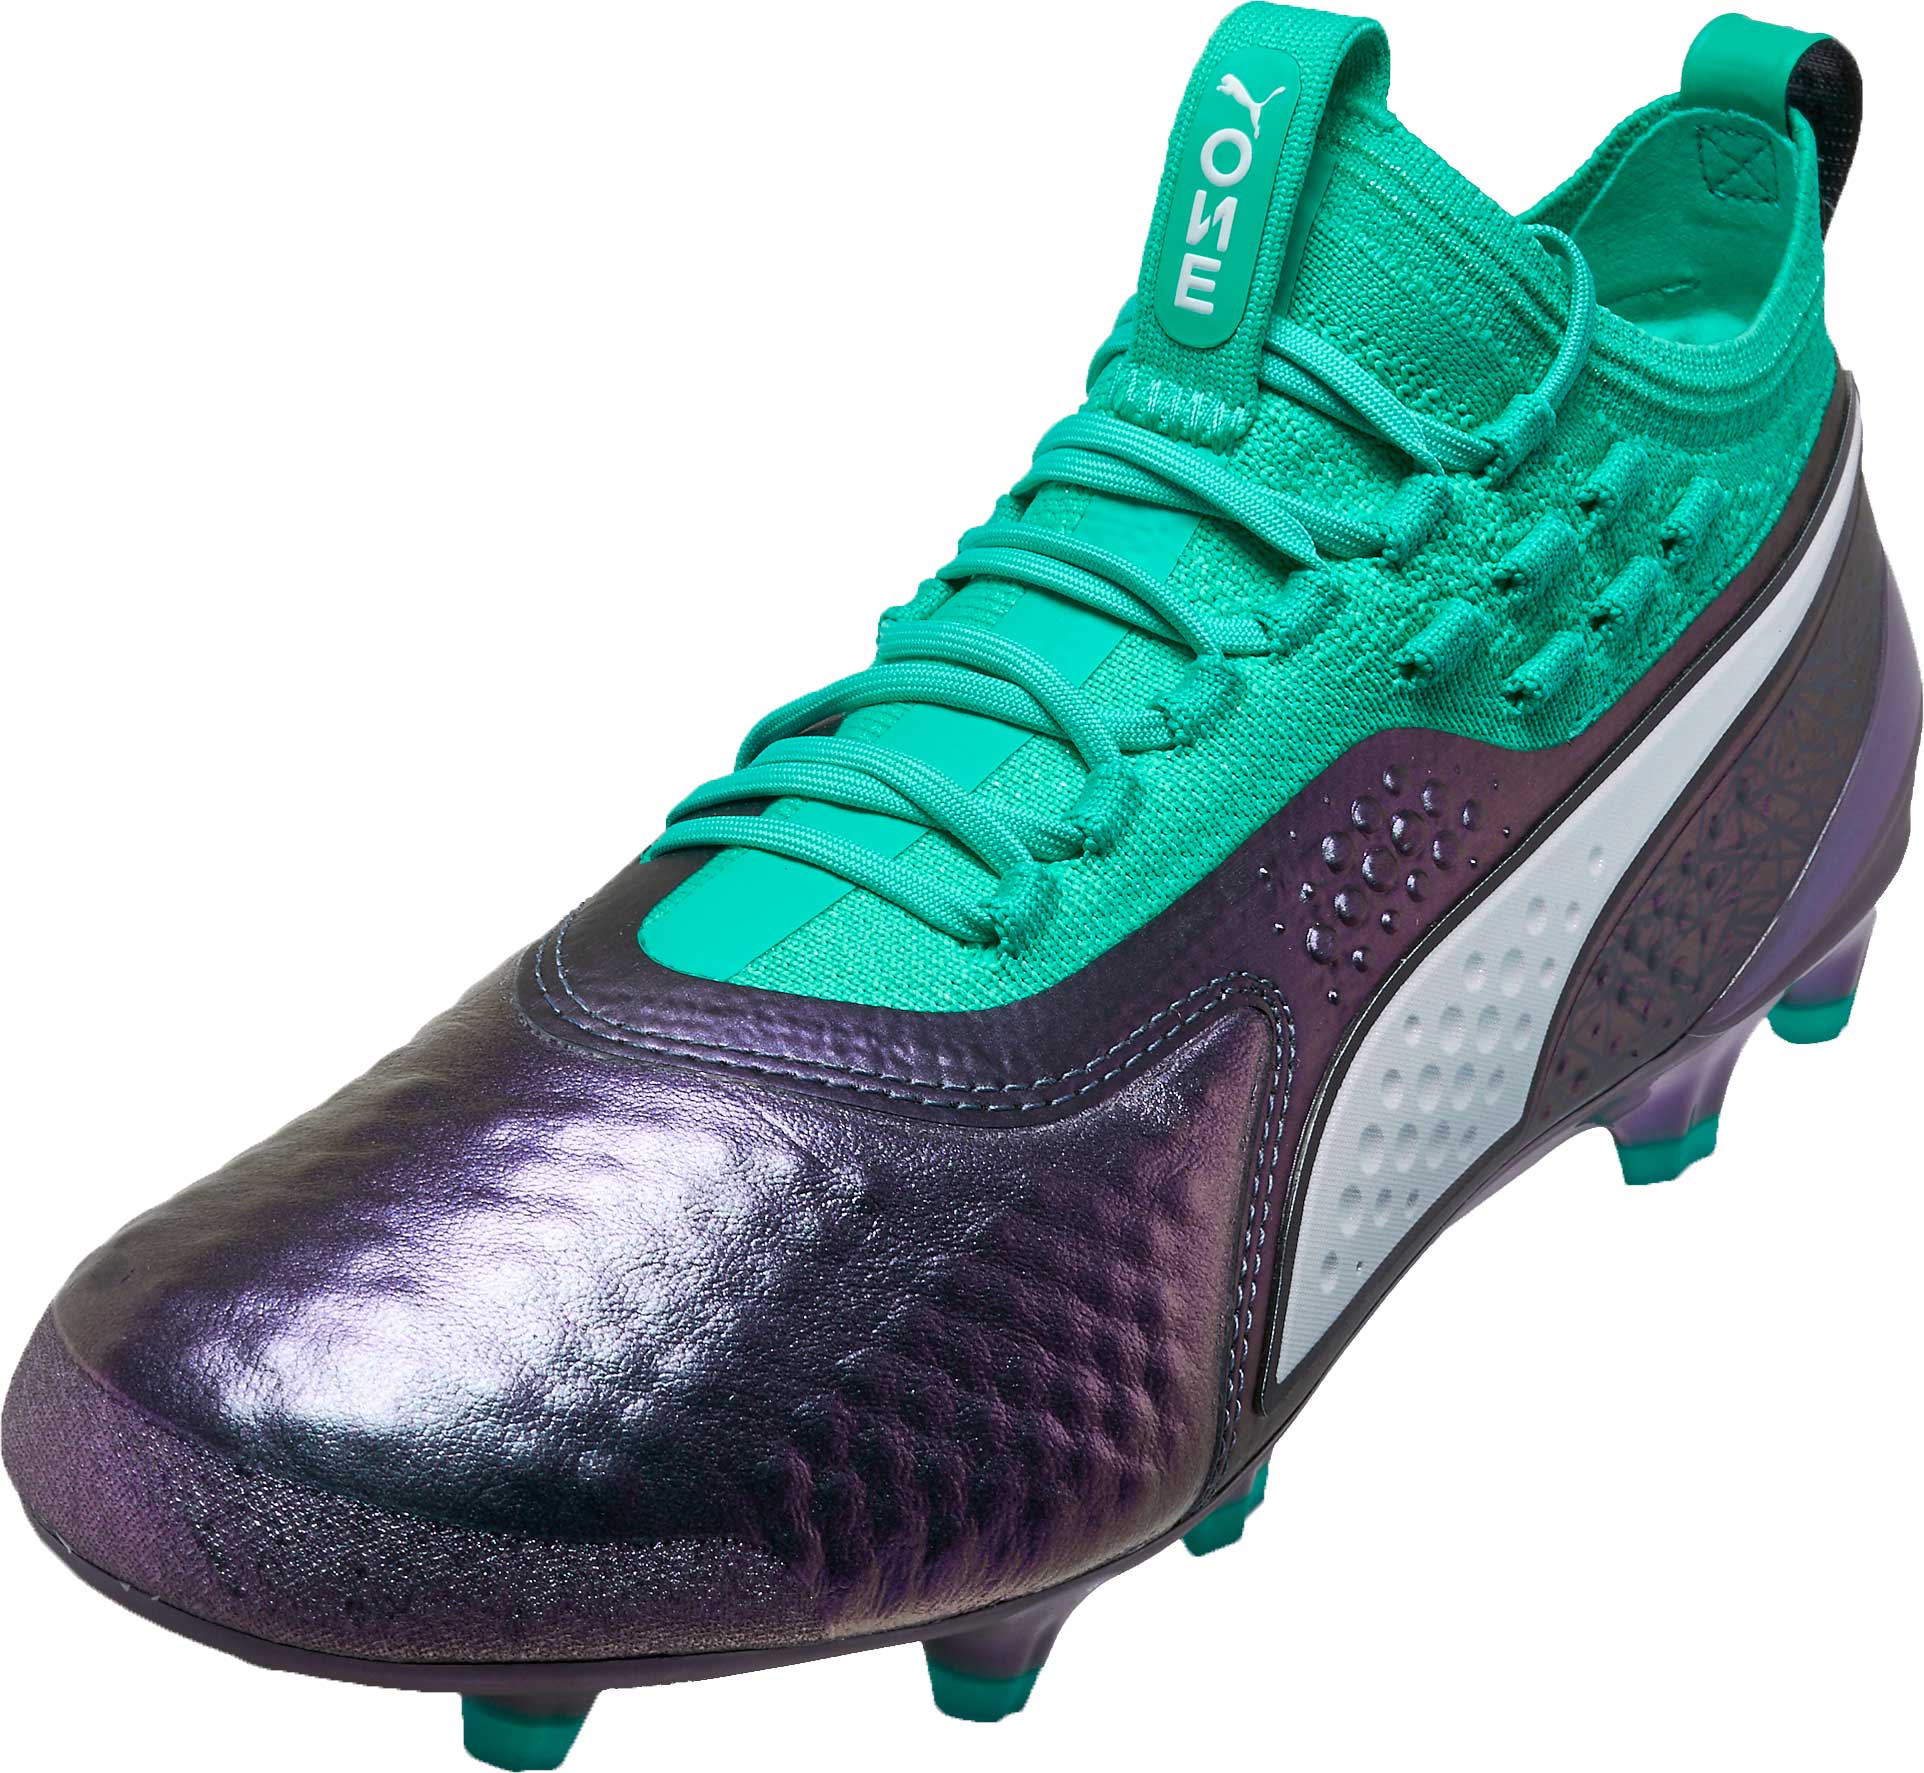 Puma ONE Leather Cleats - Puma Soccer Shoes